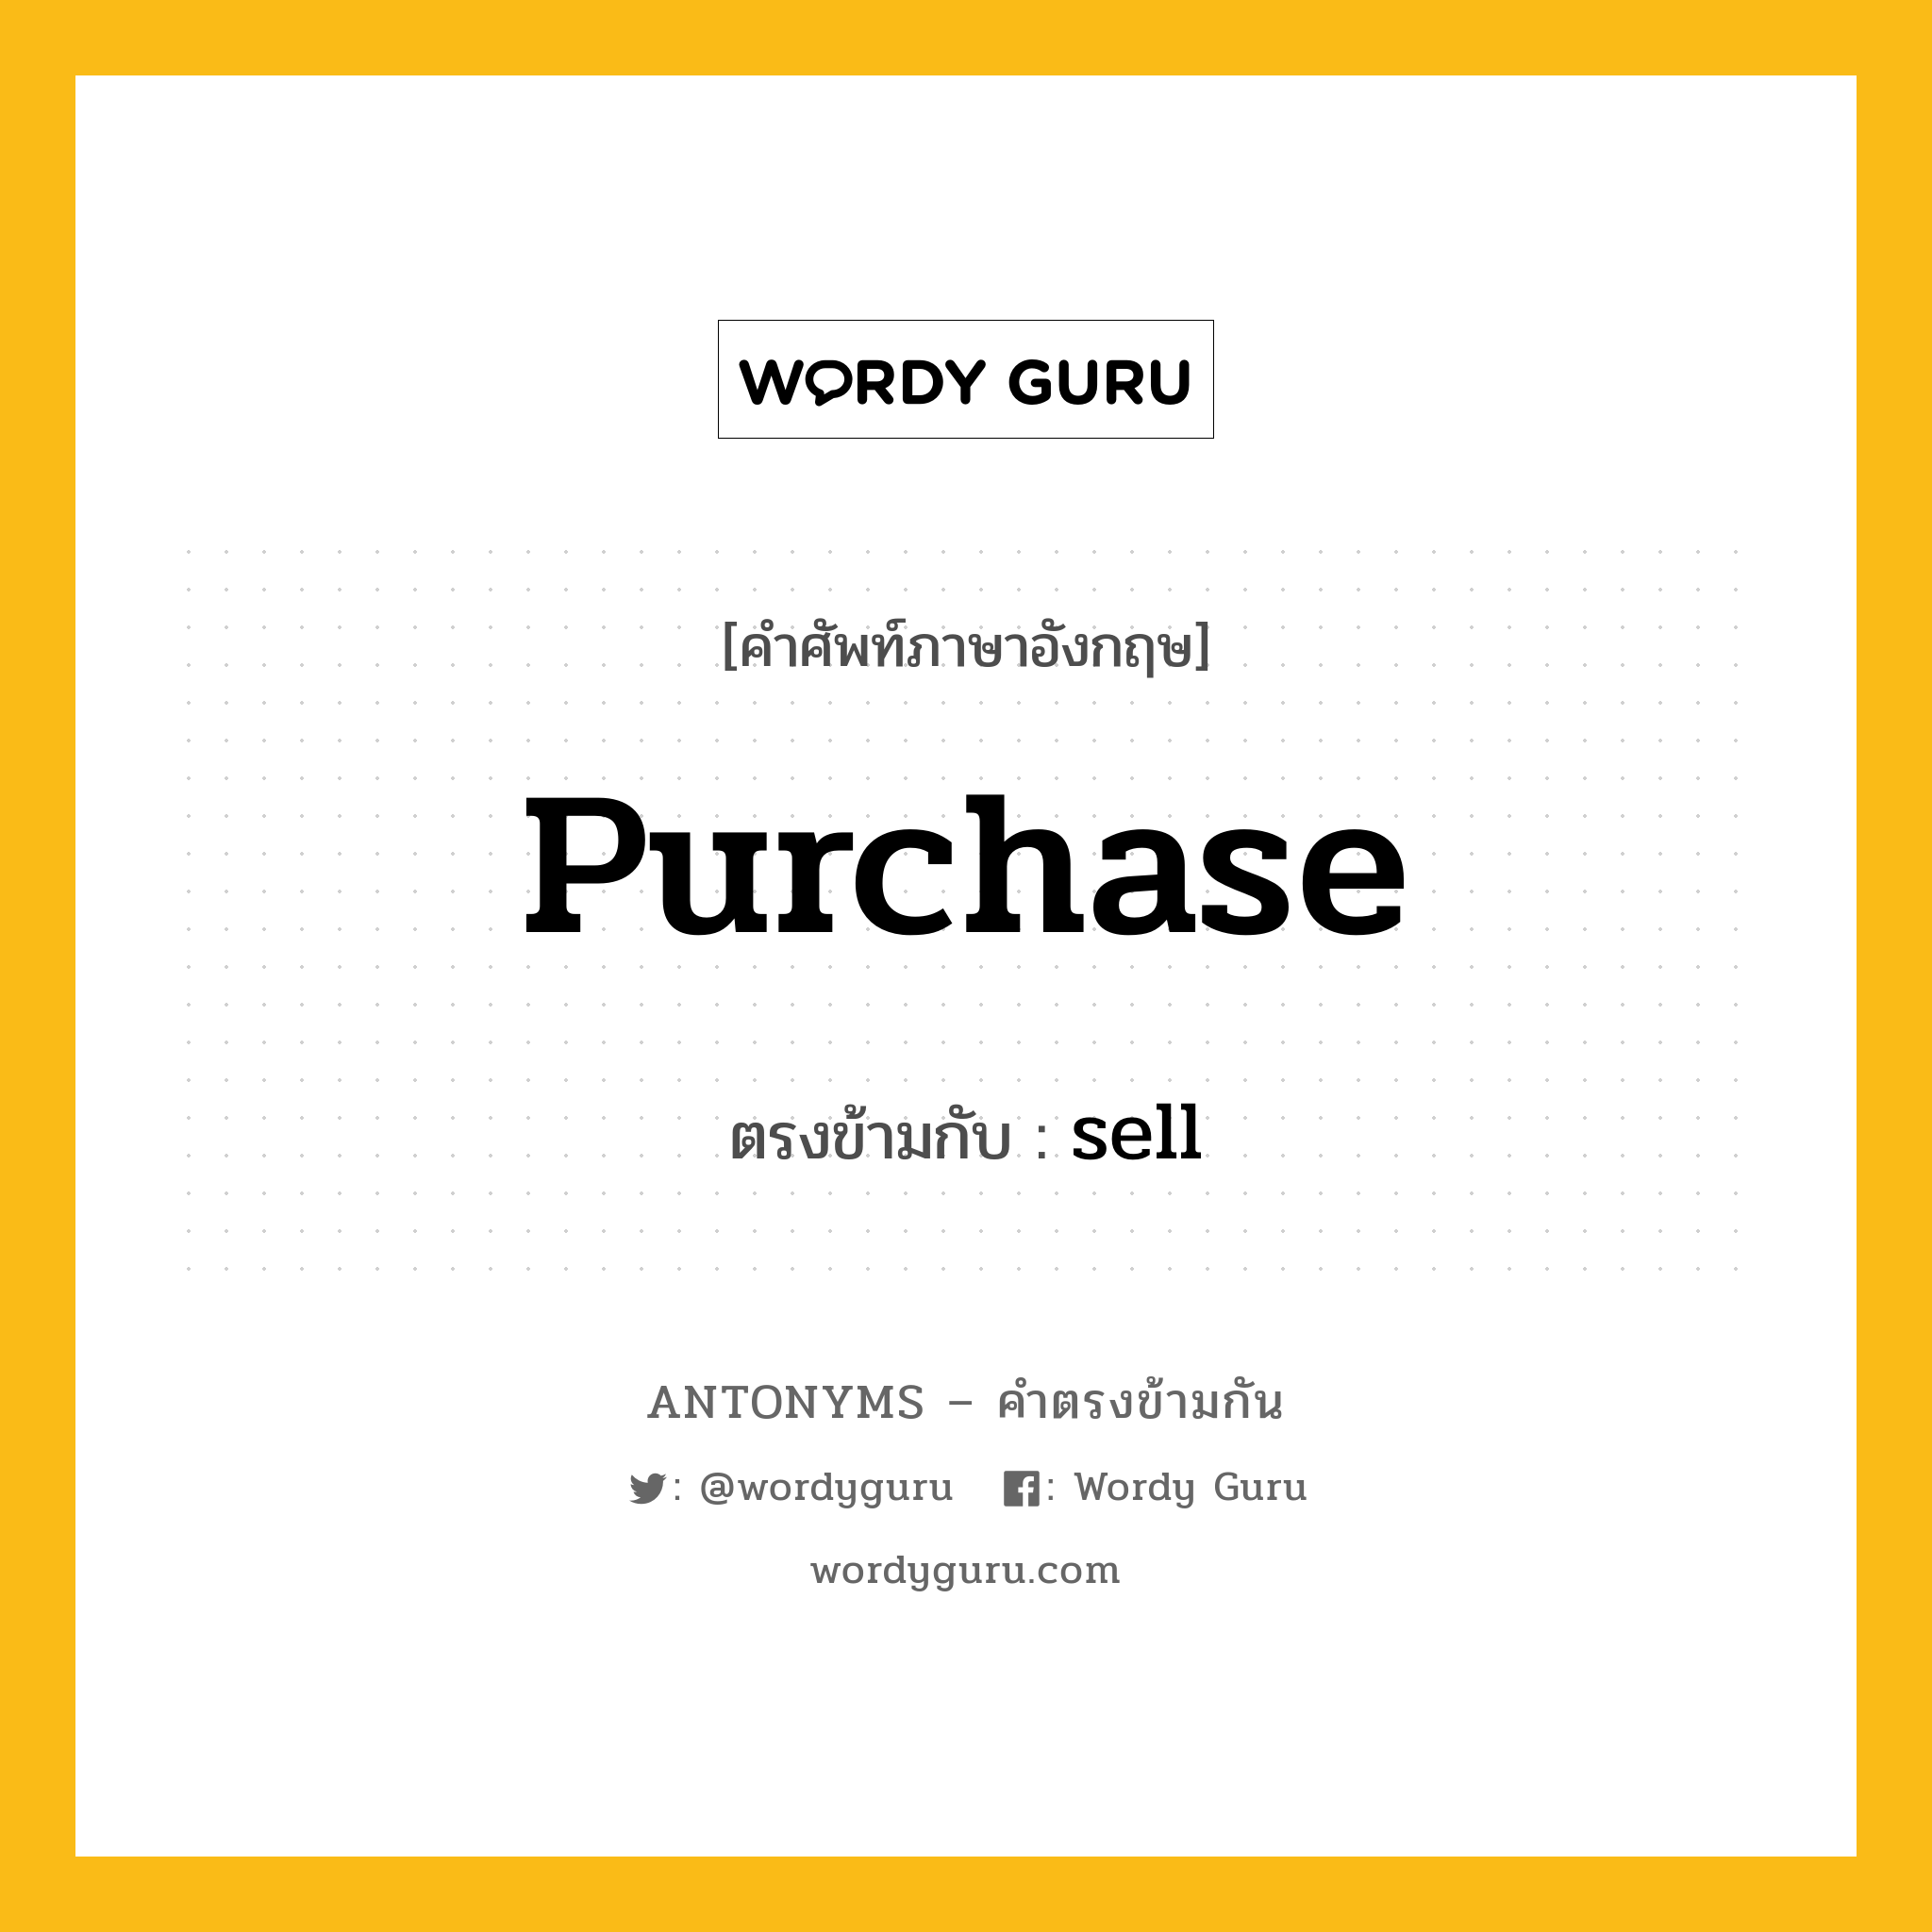 purchase เป็นคำตรงข้ามกับคำไหนบ้าง?, คำศัพท์ภาษาอังกฤษ purchase ตรงข้ามกับ sell หมวด sell